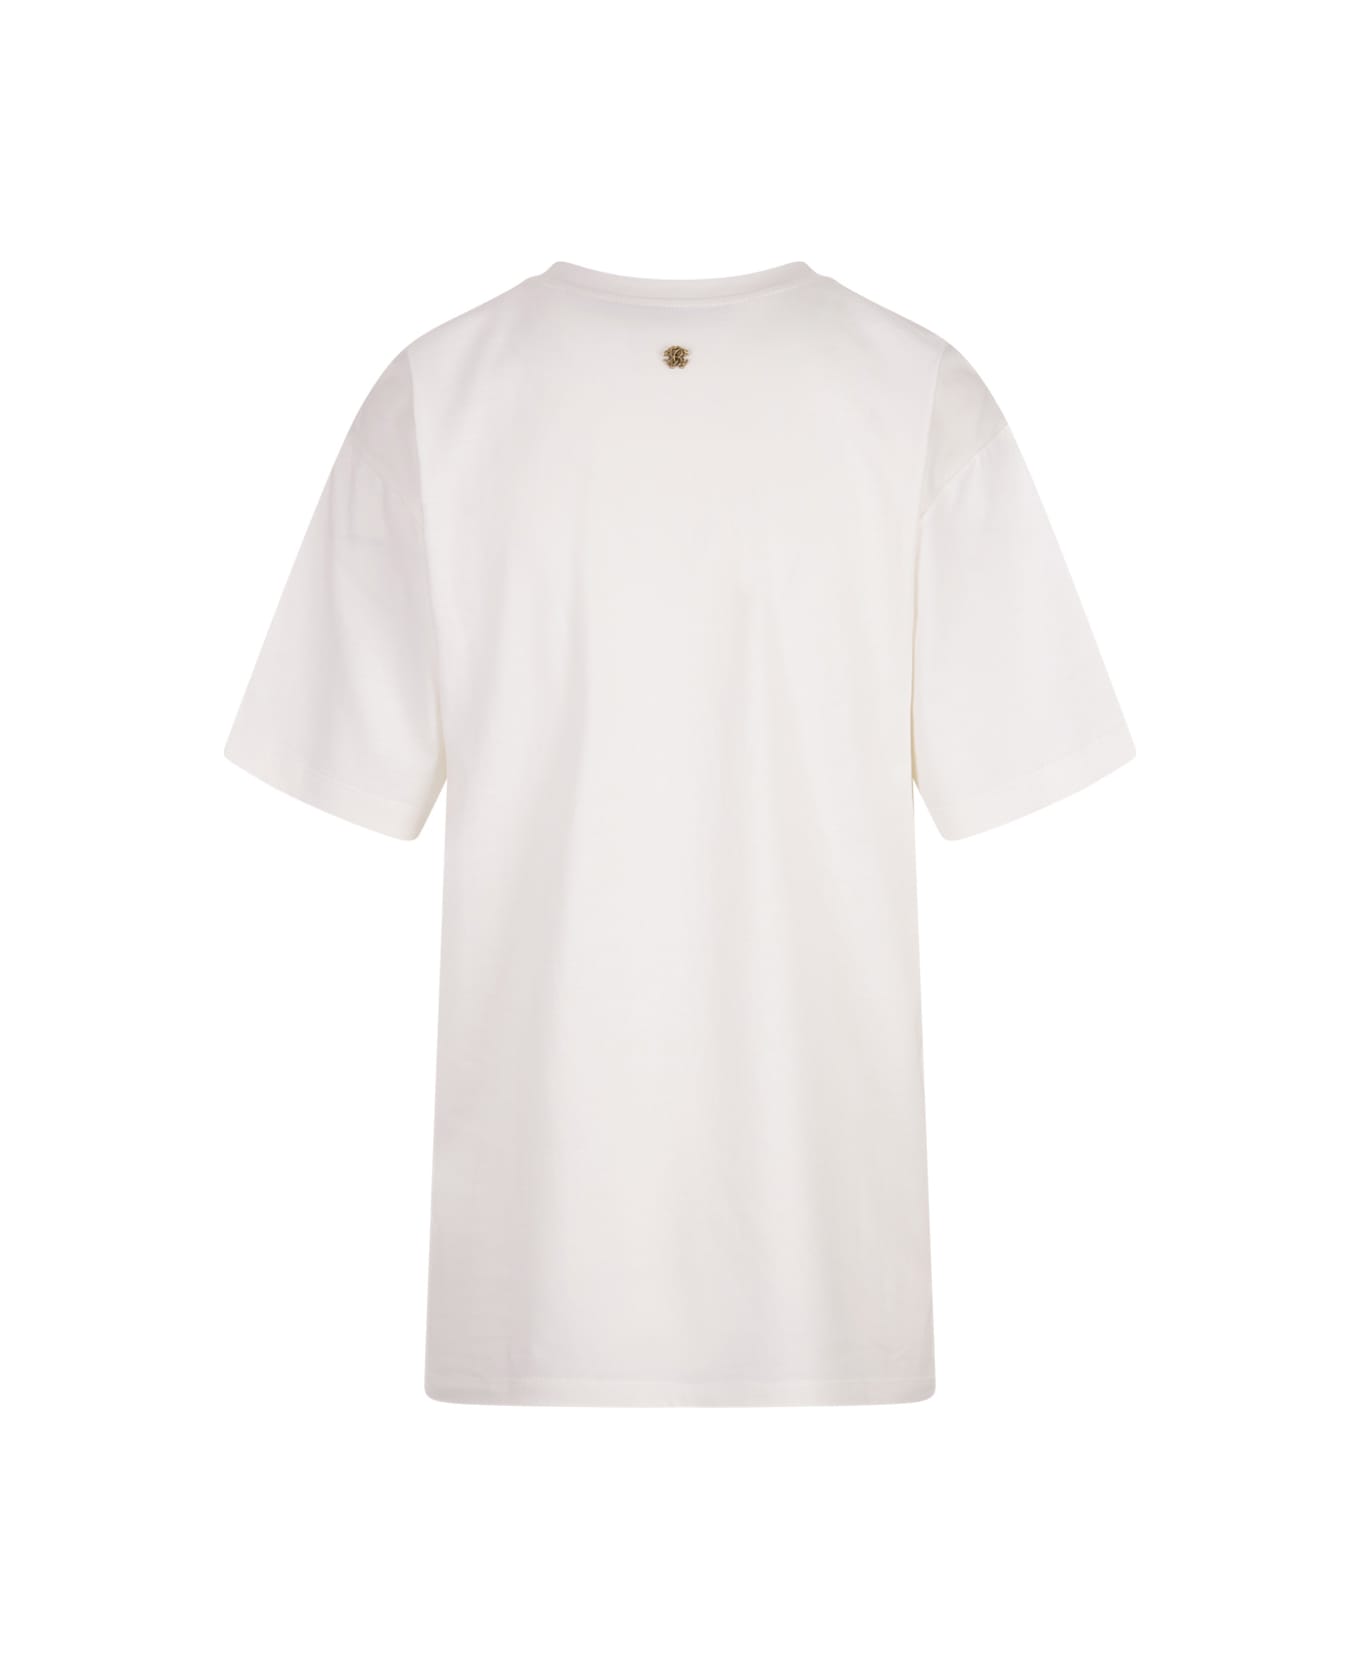 Roberto Cavalli Plumage T-shirt - White Tシャツ